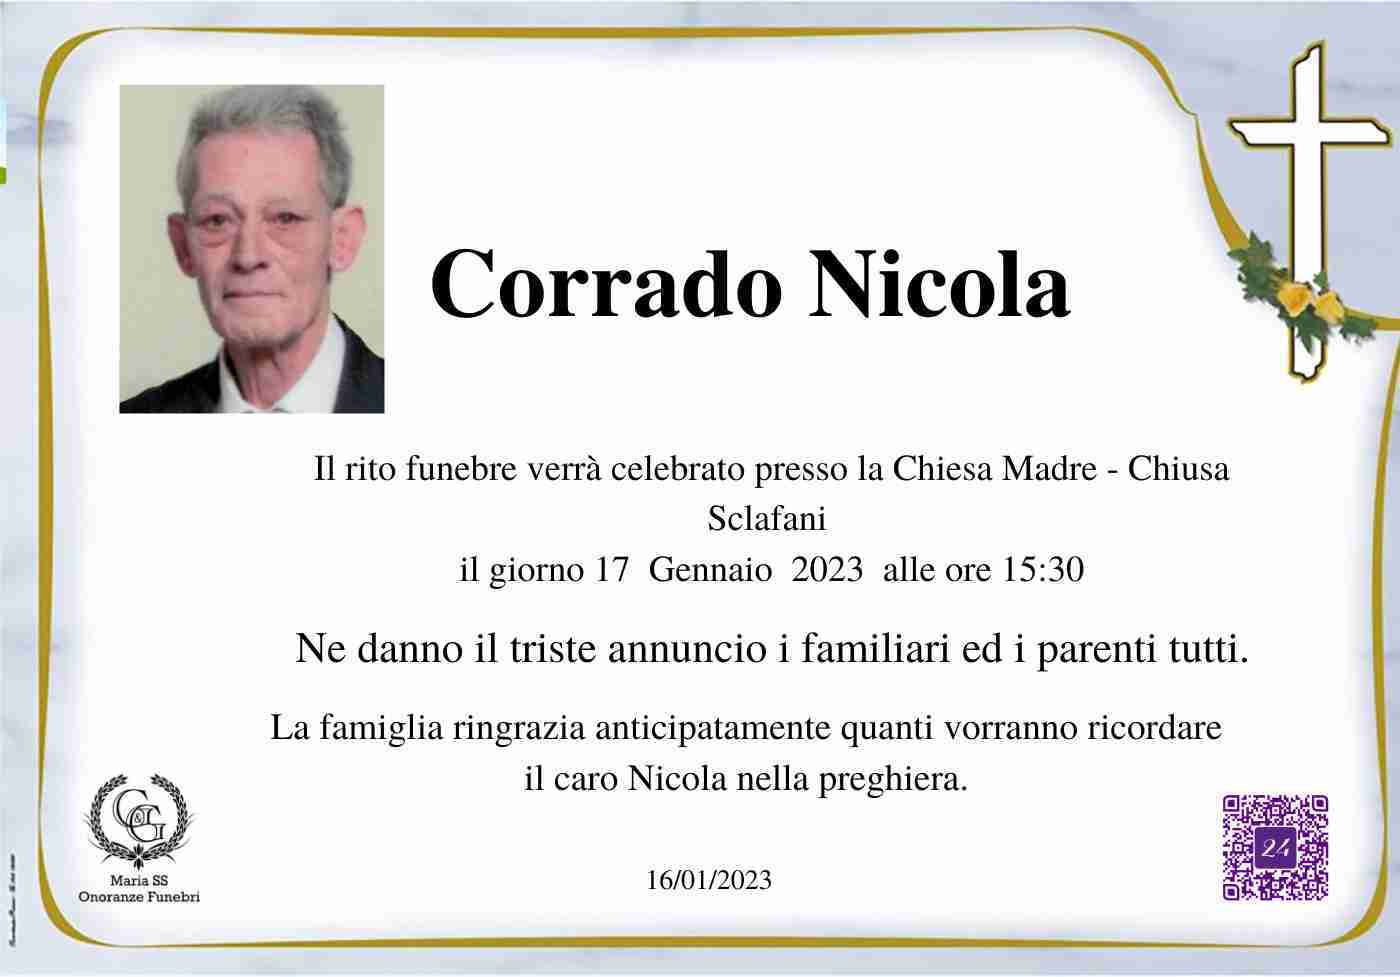 Nicola Corrado